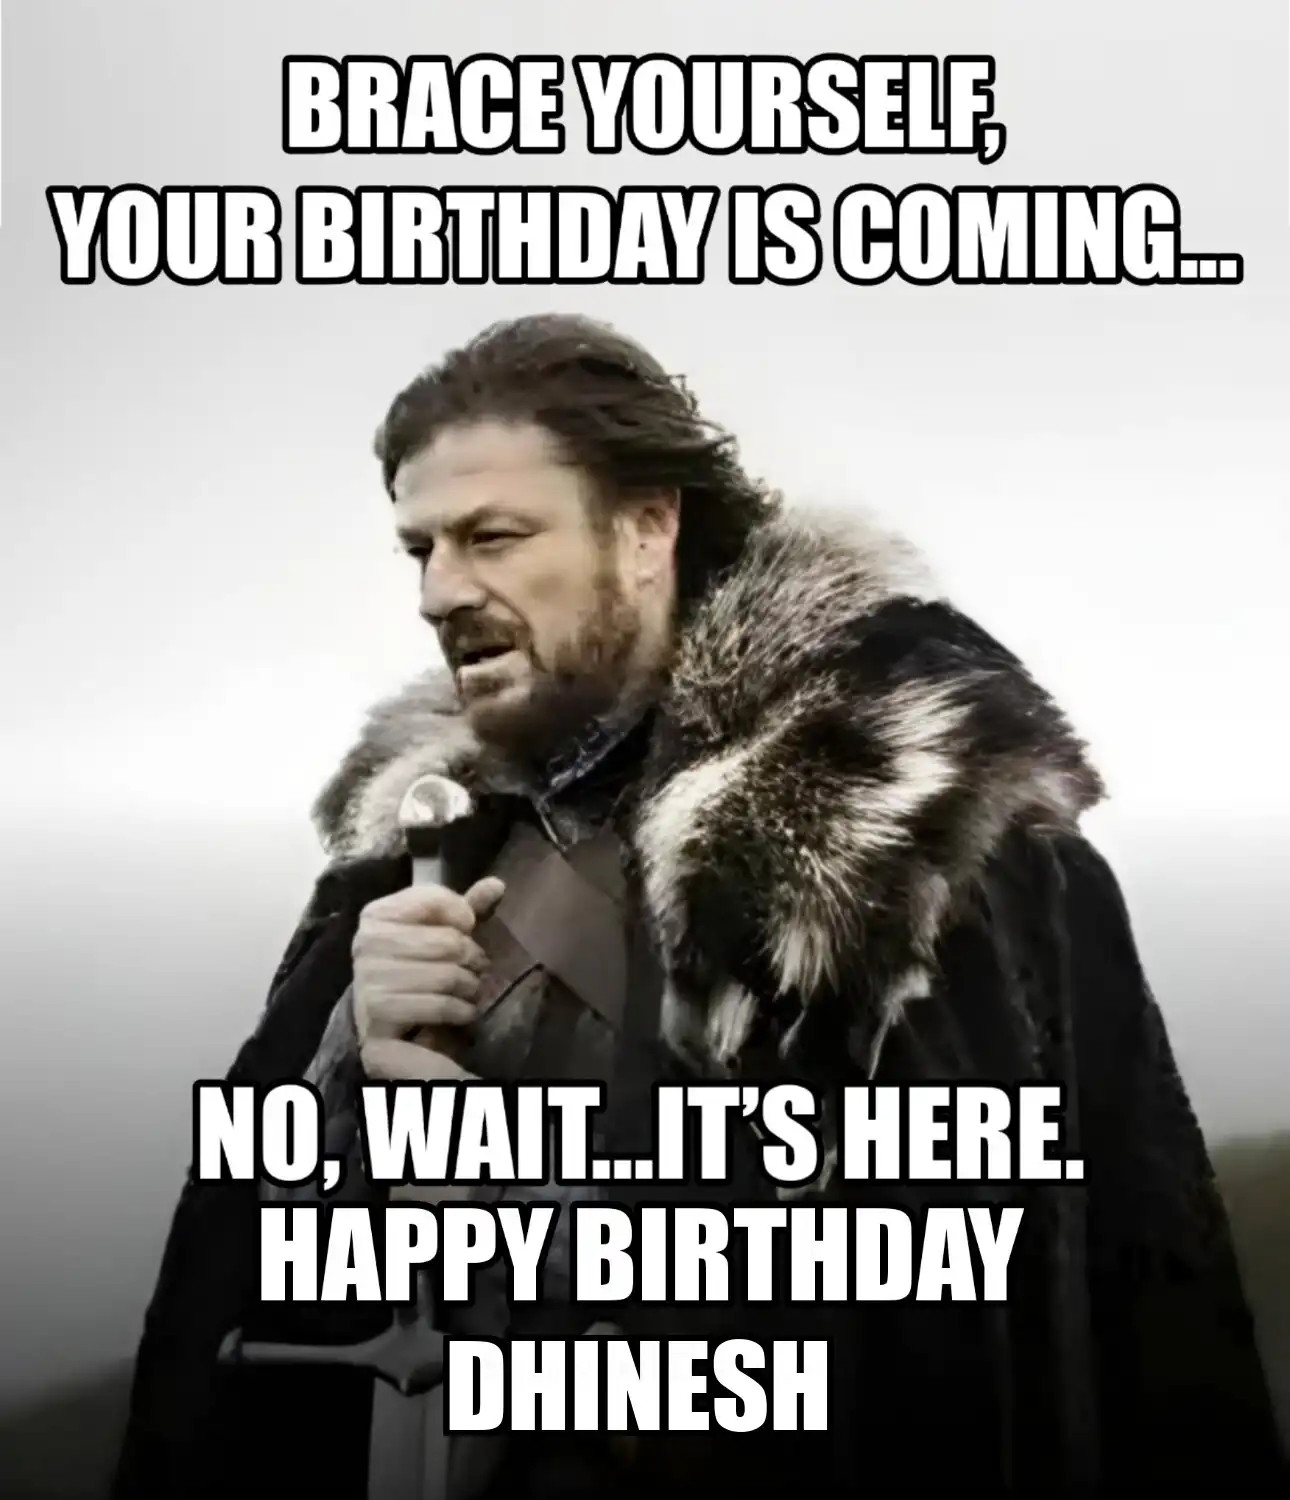 Happy Birthday Dhinesh Brace Yourself Your Birthday Is Coming Meme